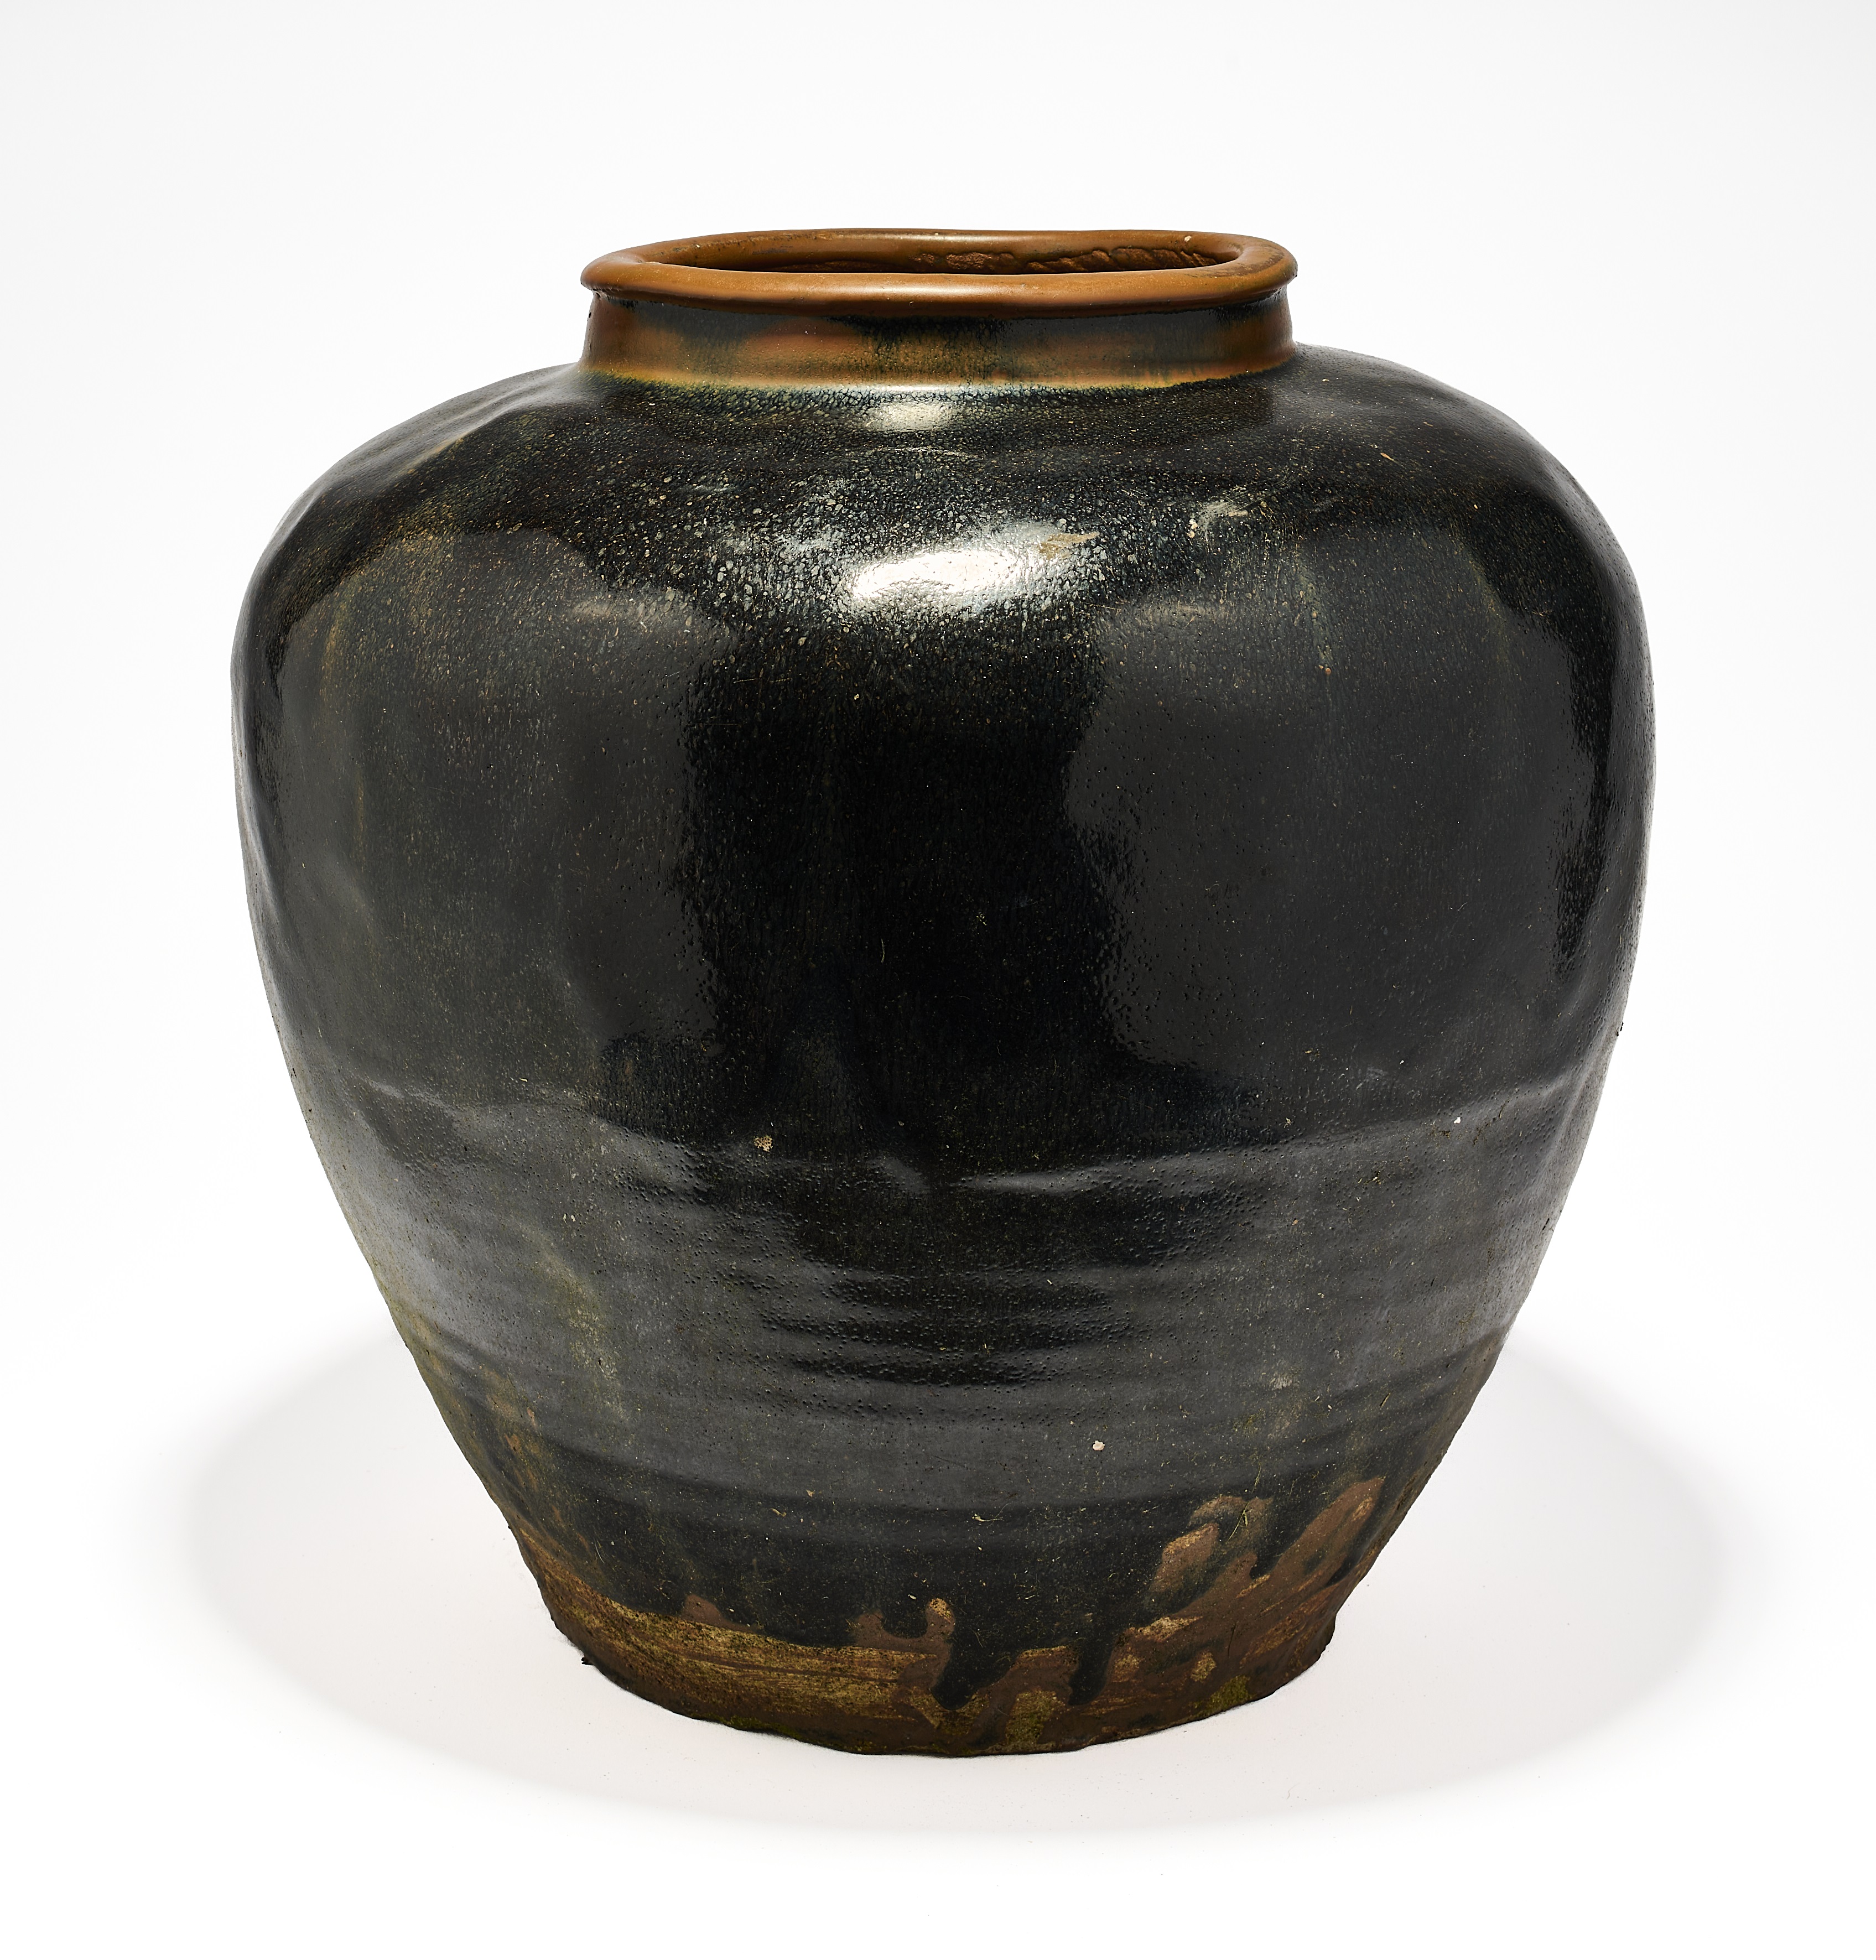 A CHINESE BLACK-GLAZED STONEWARE LOBED JAR, PROBABLY MING DYNASTY, 16TH/17TH CENTURY